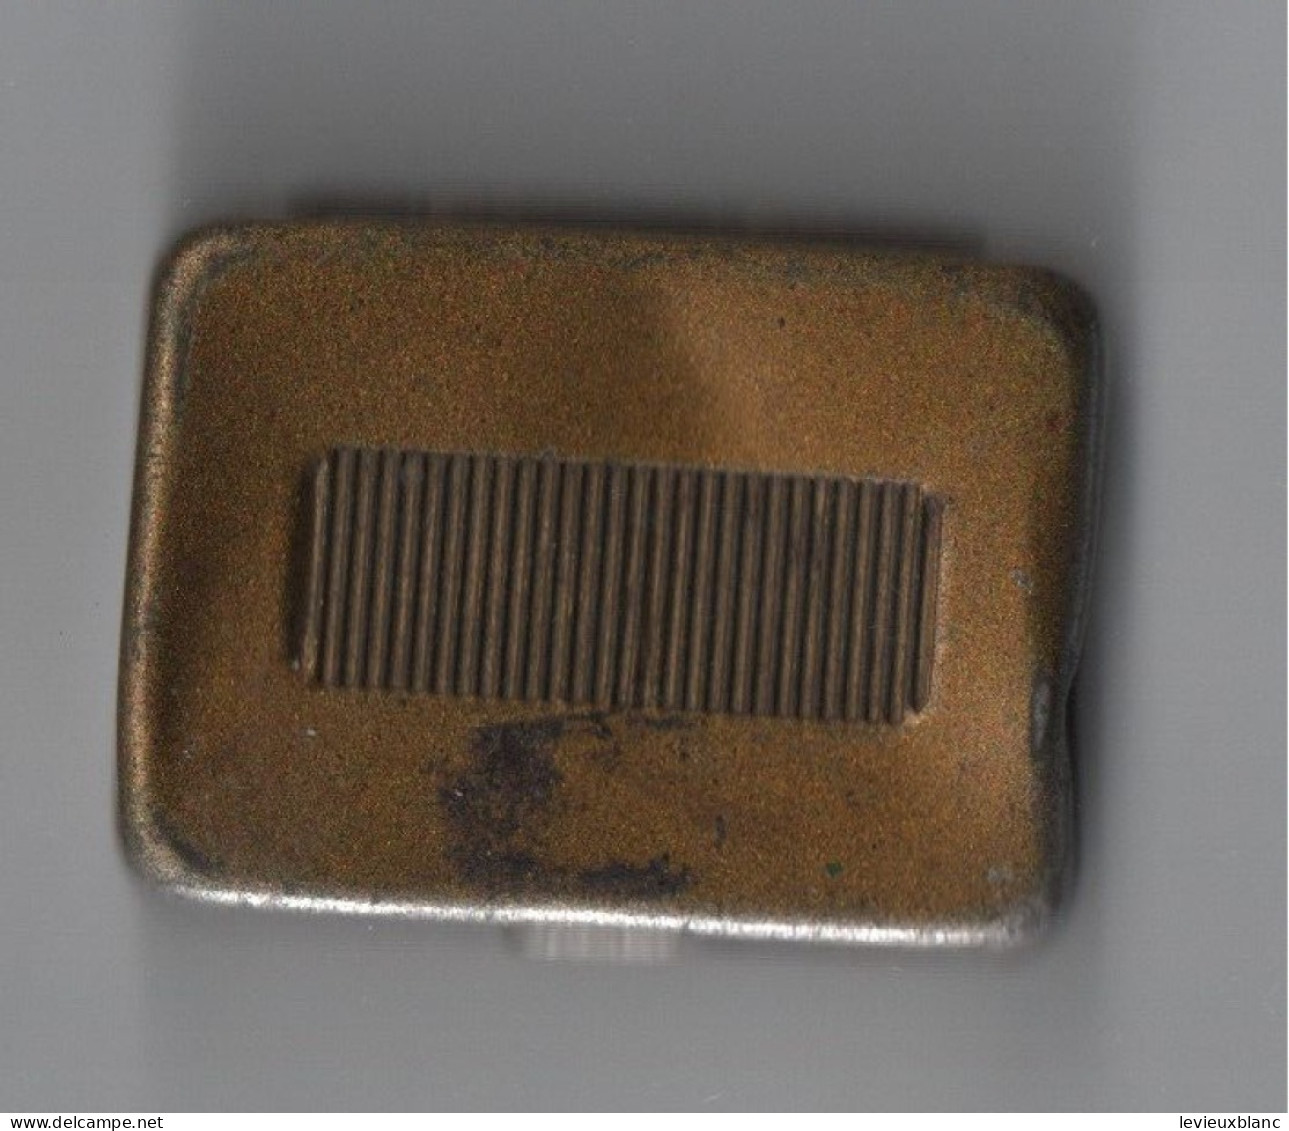 Petite boite métal de plumes/J.B. MALLAT/ LONDON PARIS/ Vers 1930-1950      CAH364